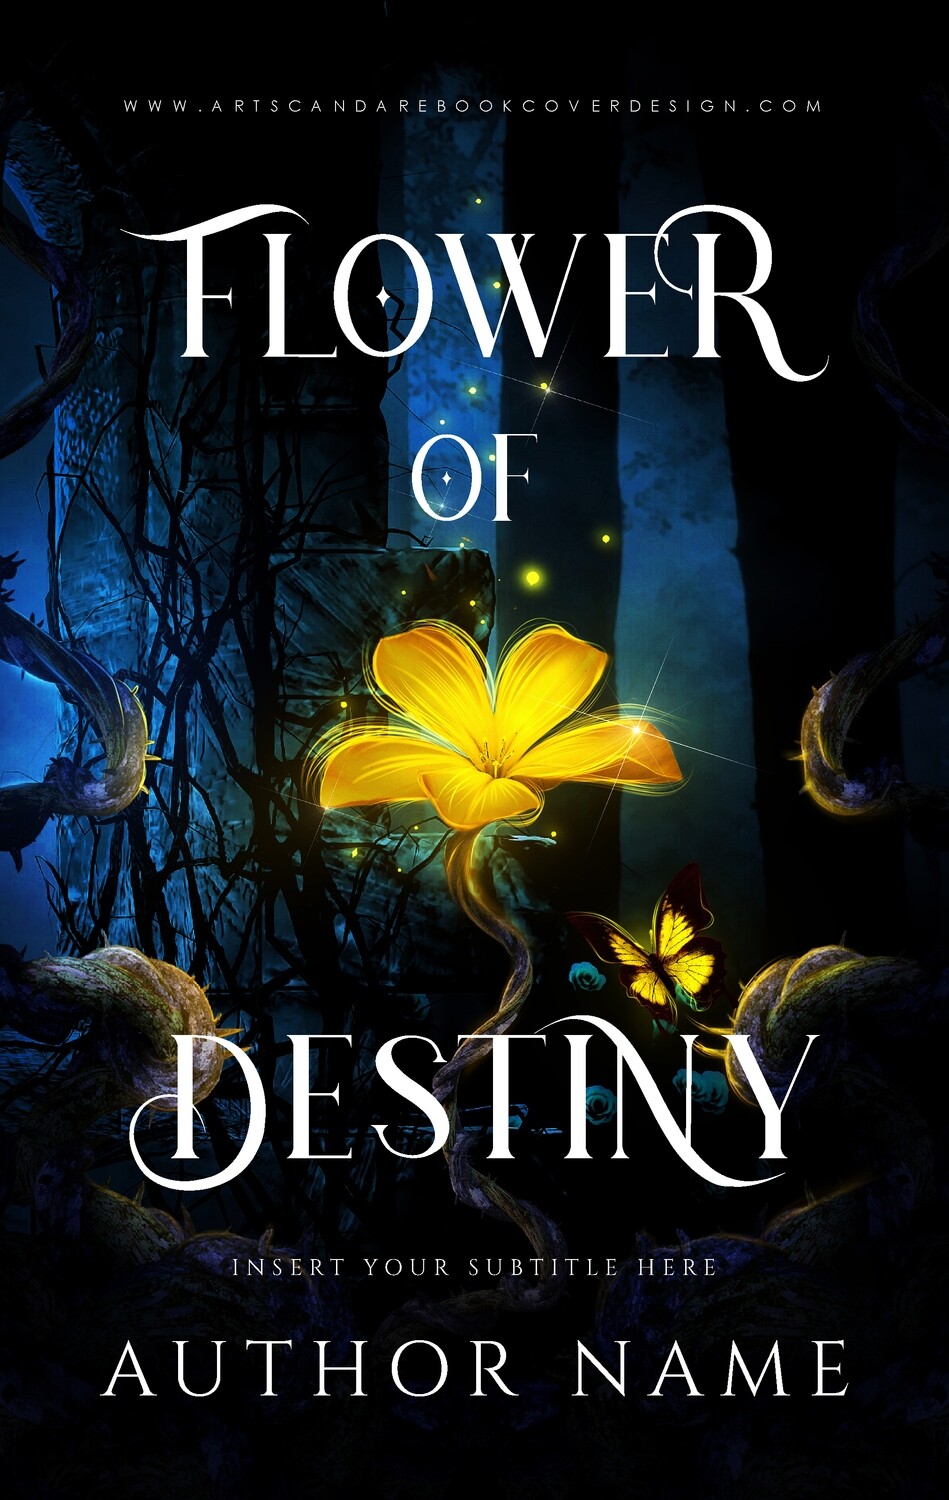 Ebook: Flower of Destiny